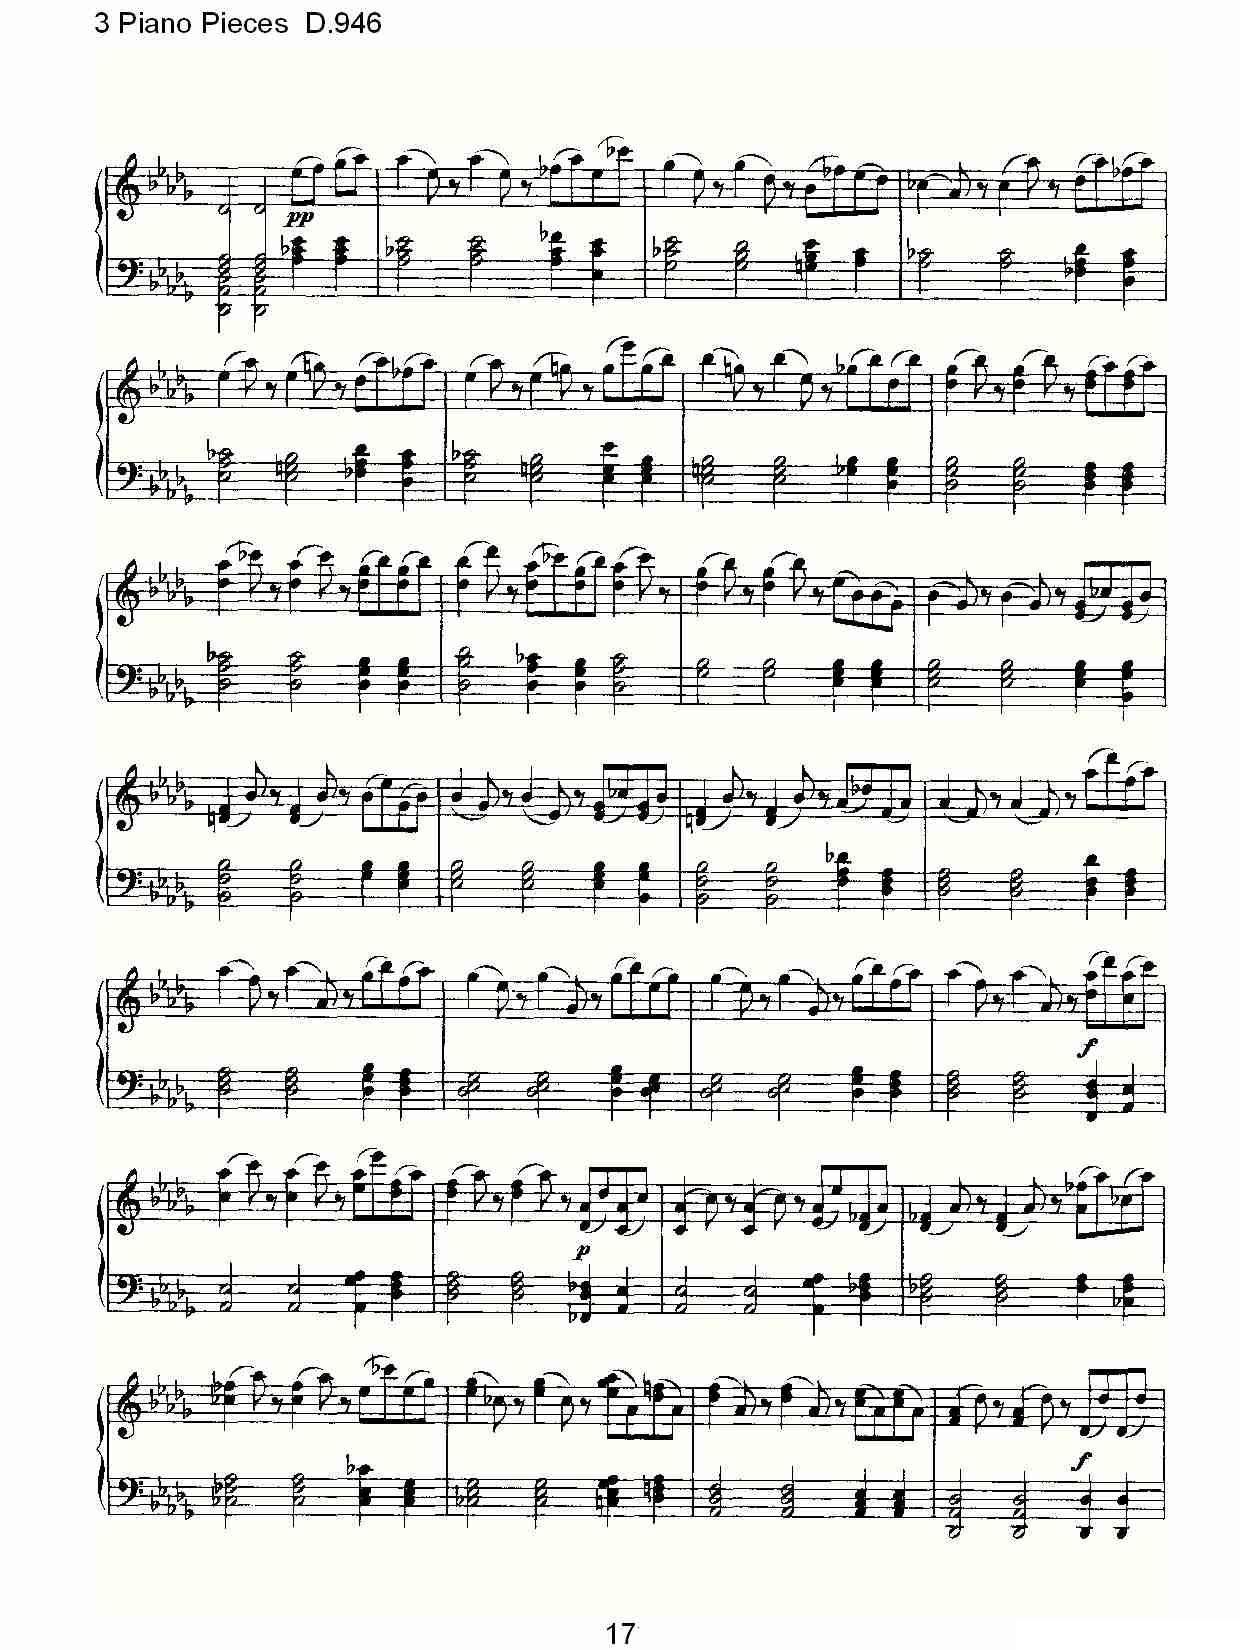 3 Piano Pieces D.946（钢琴三联奏D.946）钢琴曲谱（图17）